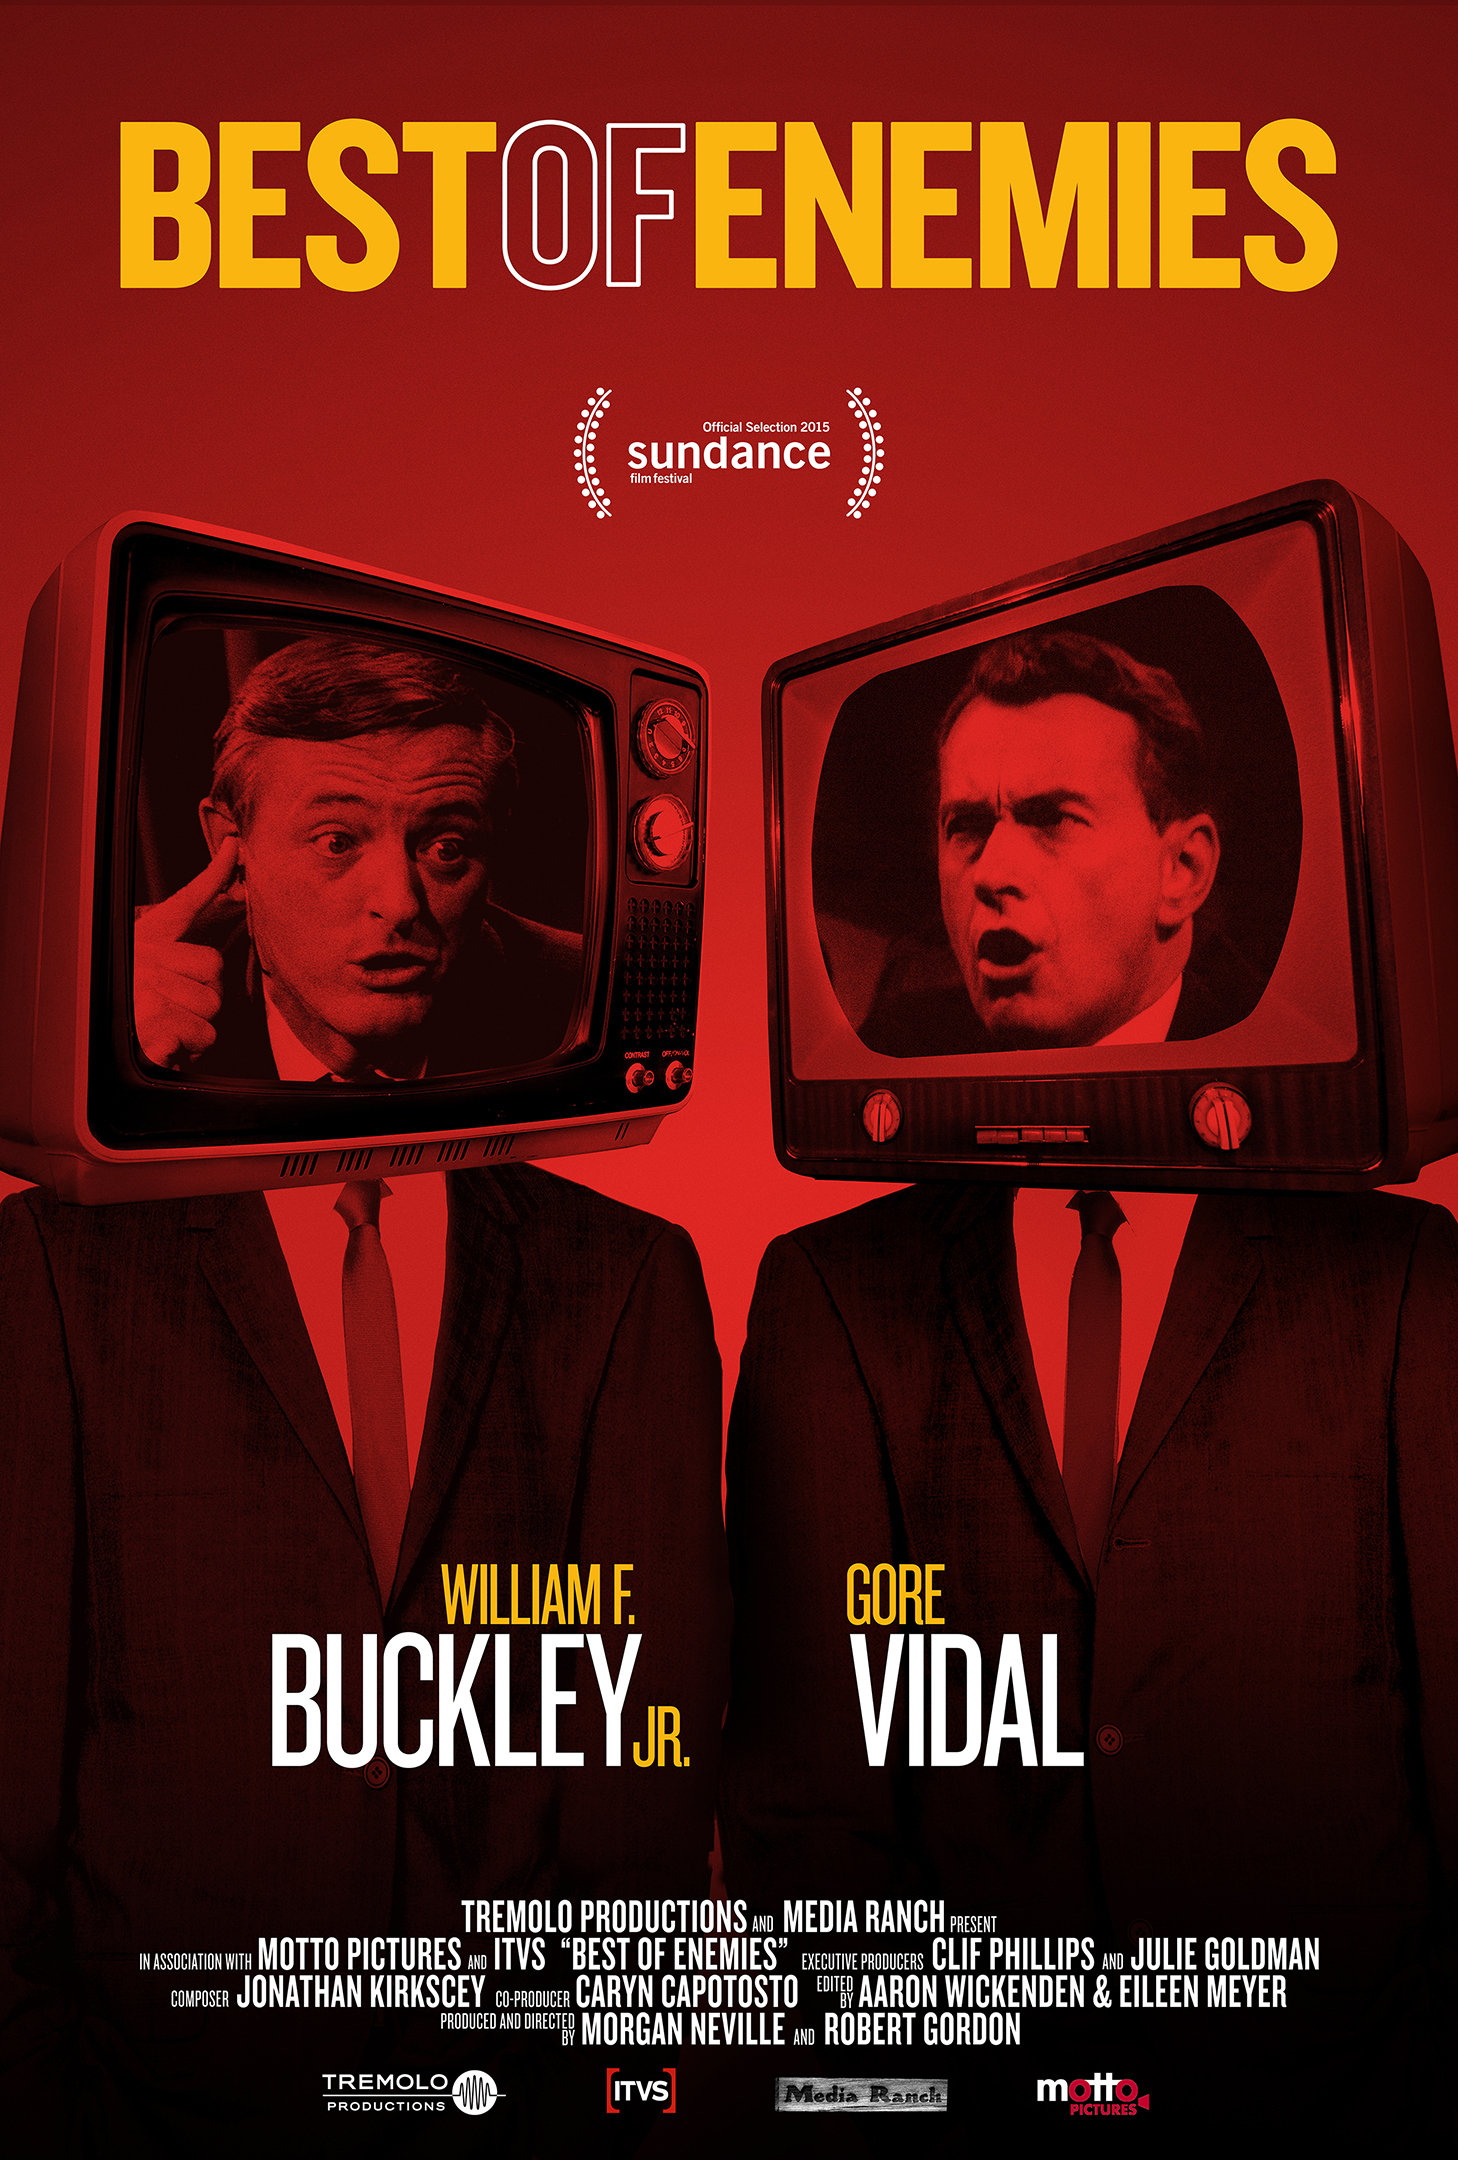 Gore Vidal and William F. Buckley in Best of Enemies (2015)